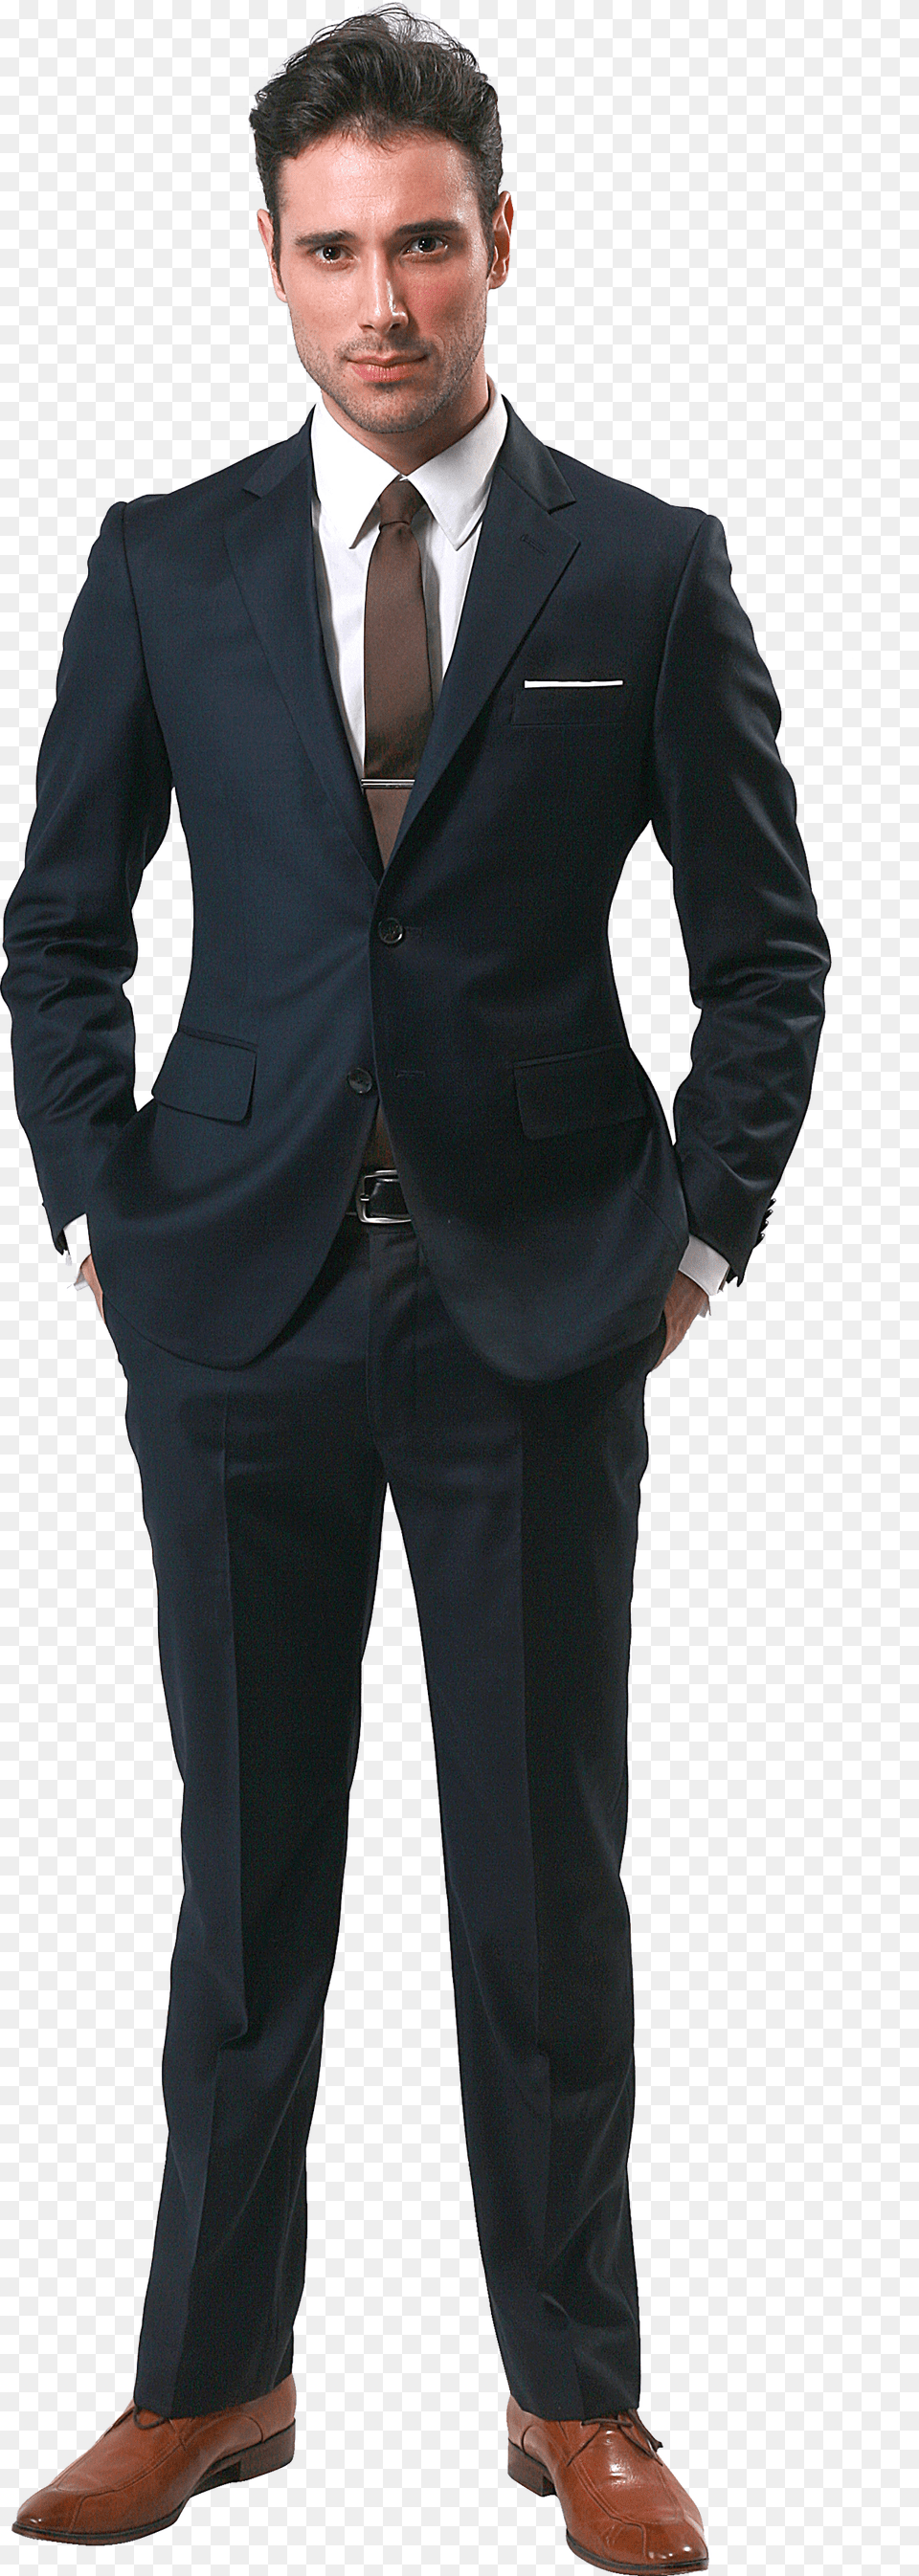 Businessman Image Businessman, Tuxedo, Suit, Clothing, Formal Wear Free Png Download